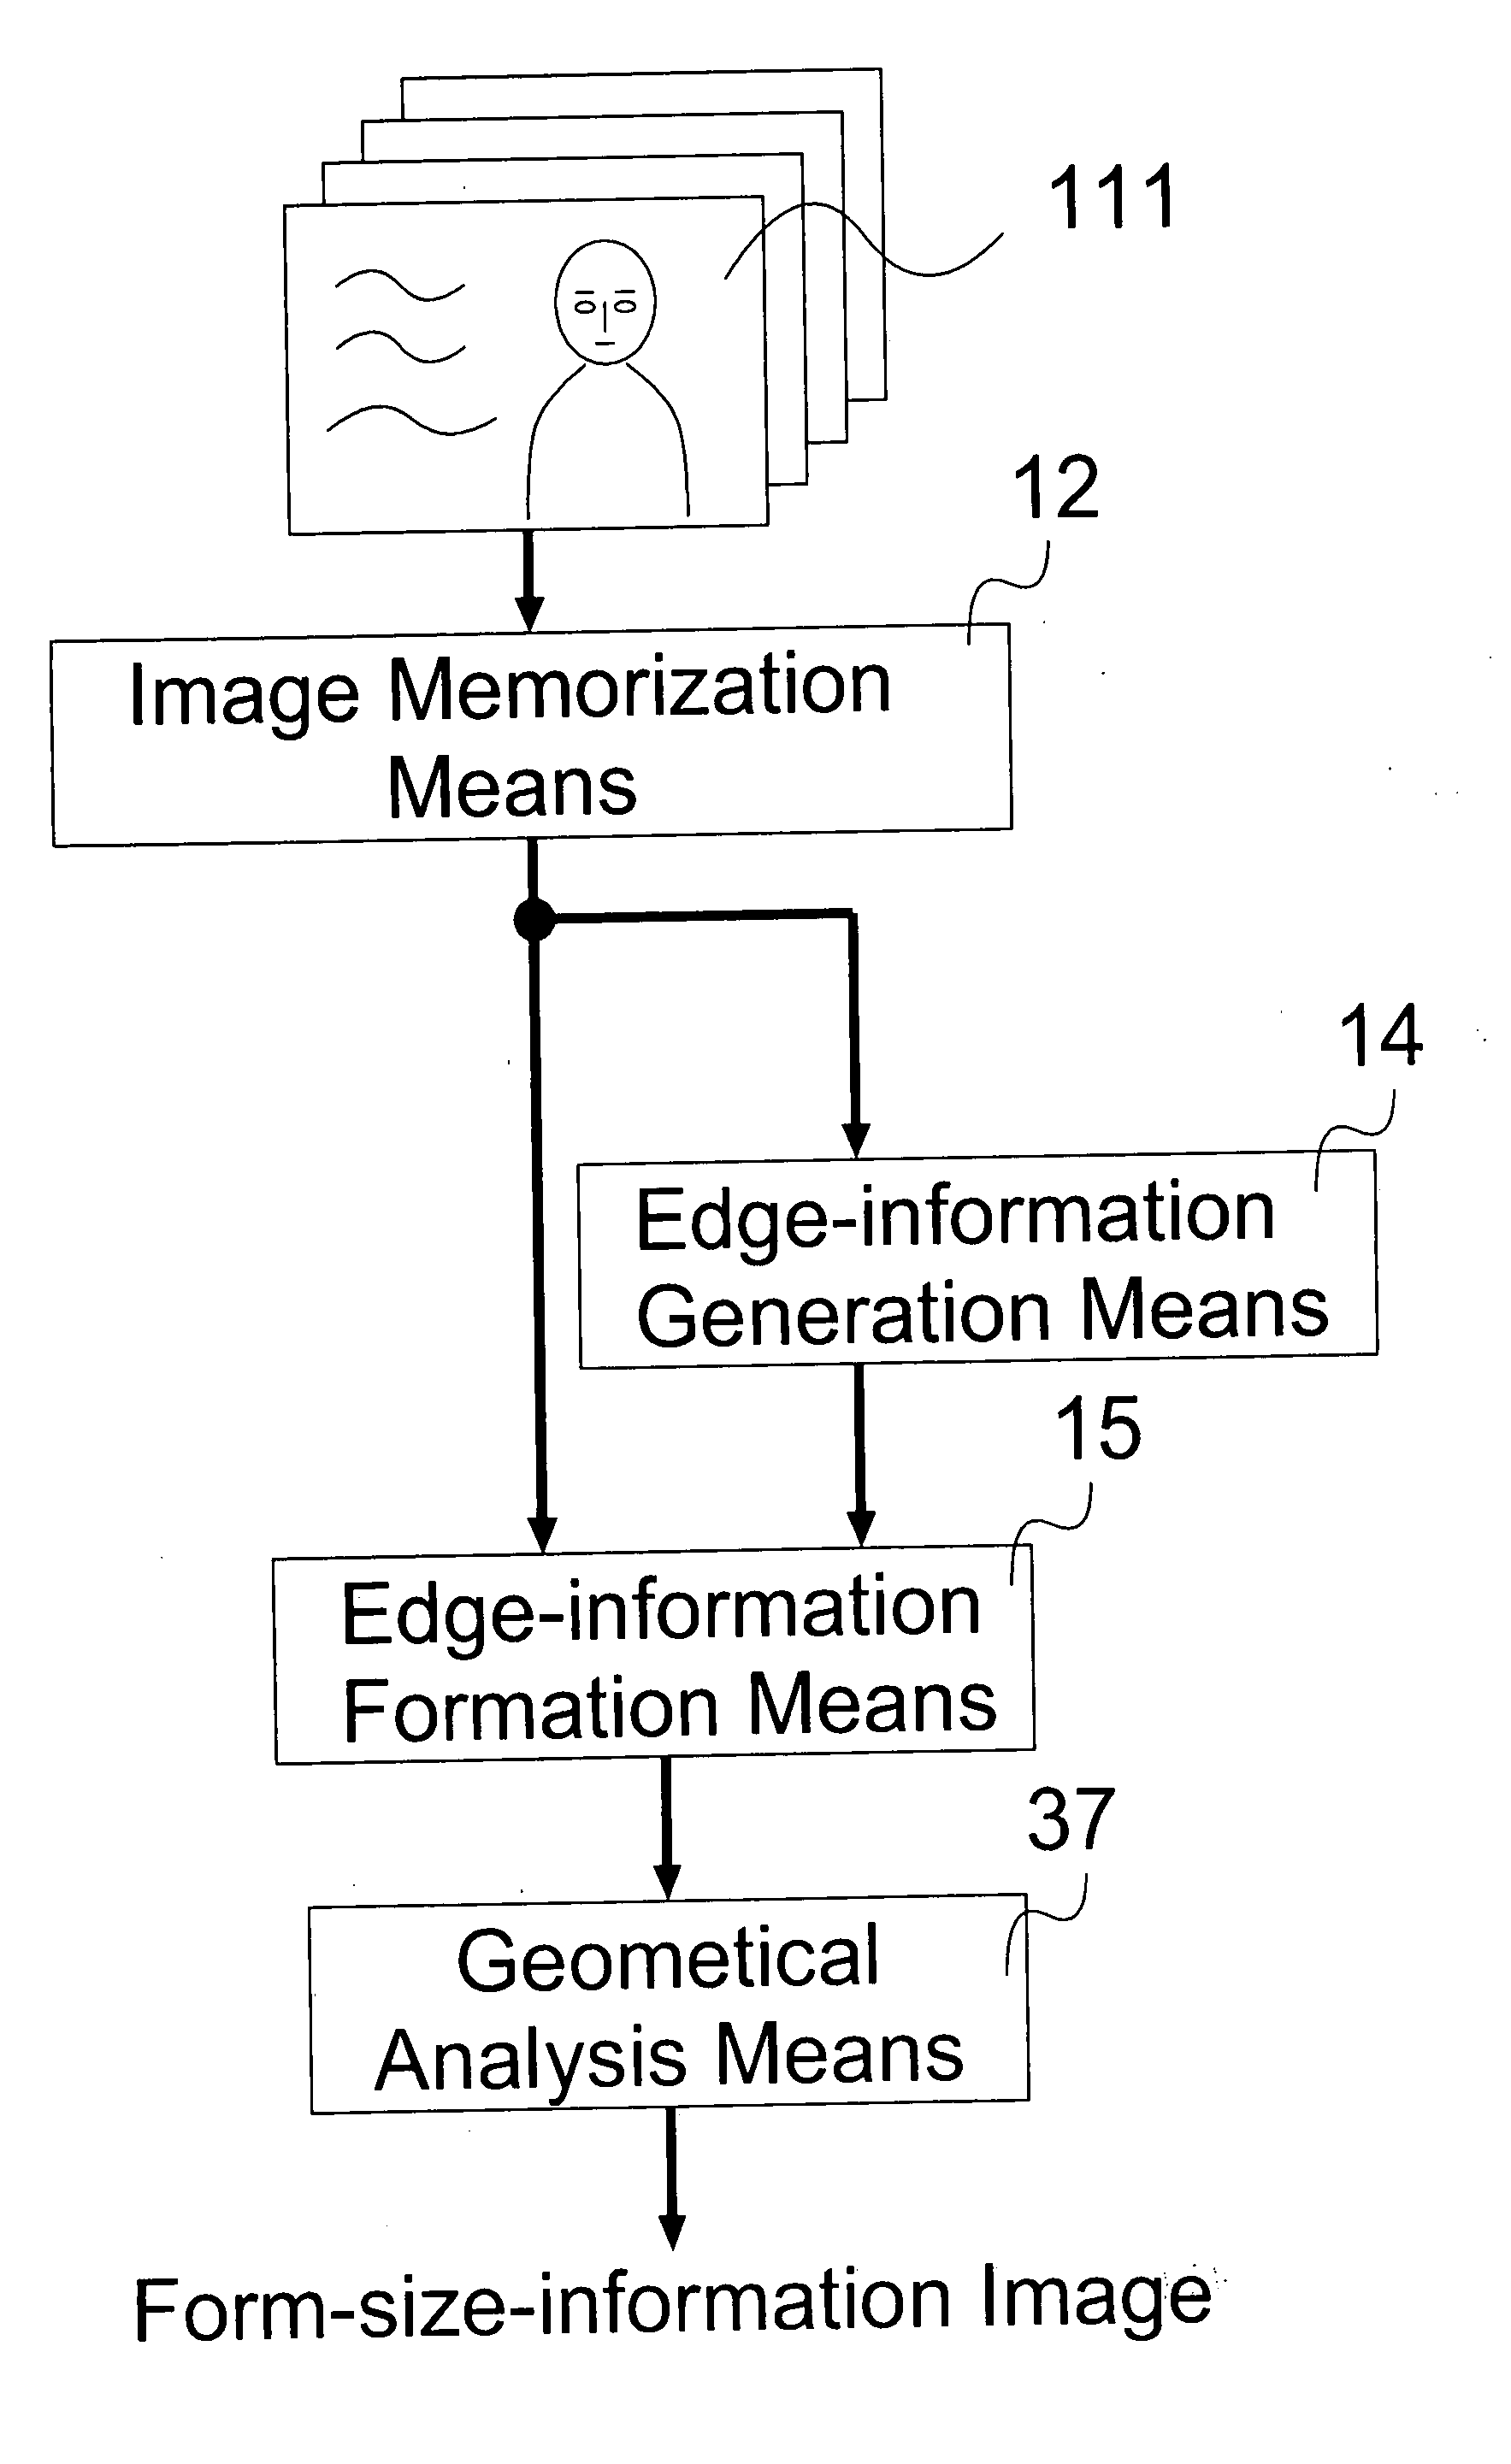 Visual device, interlocking counter, and image sensor